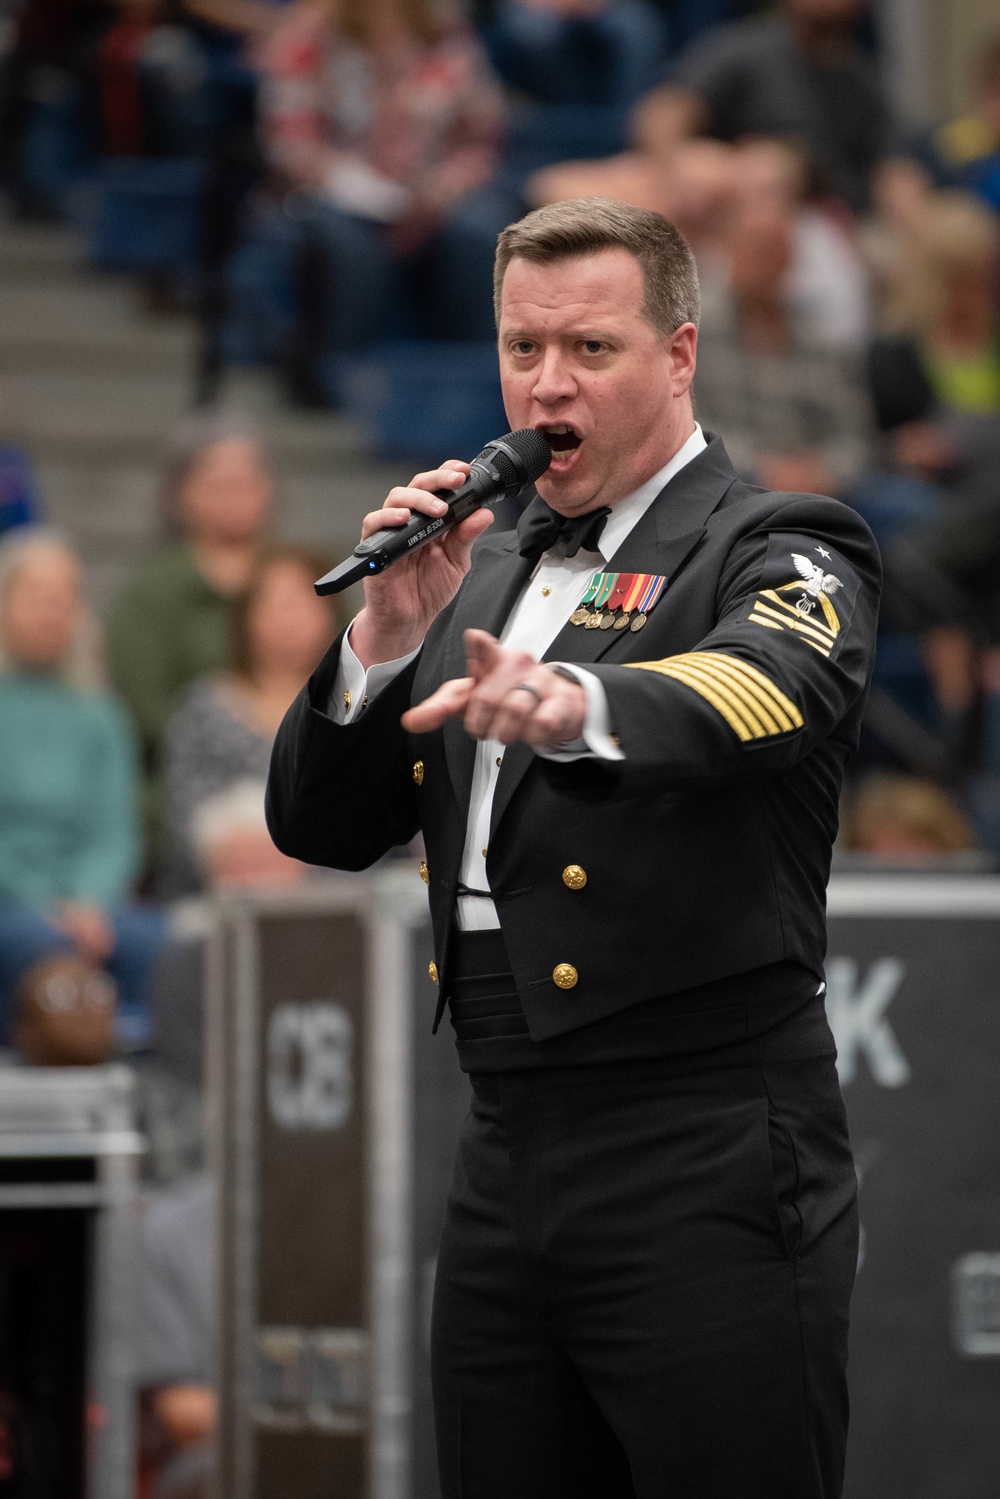 Navy Band visits Murfreesboro